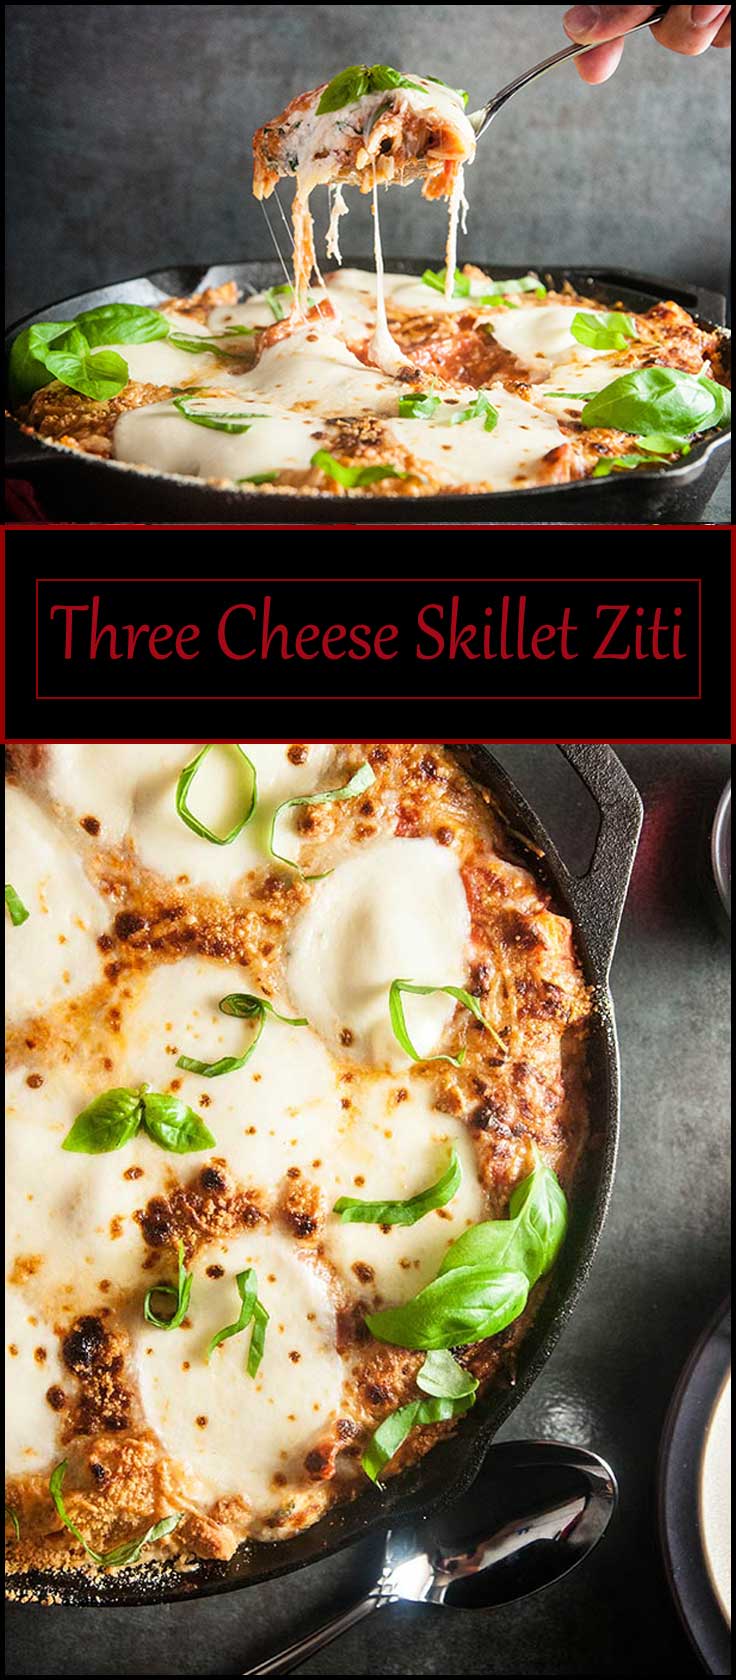 Three Cheese Skillet Ziti from www.seasonedsprinkles.com